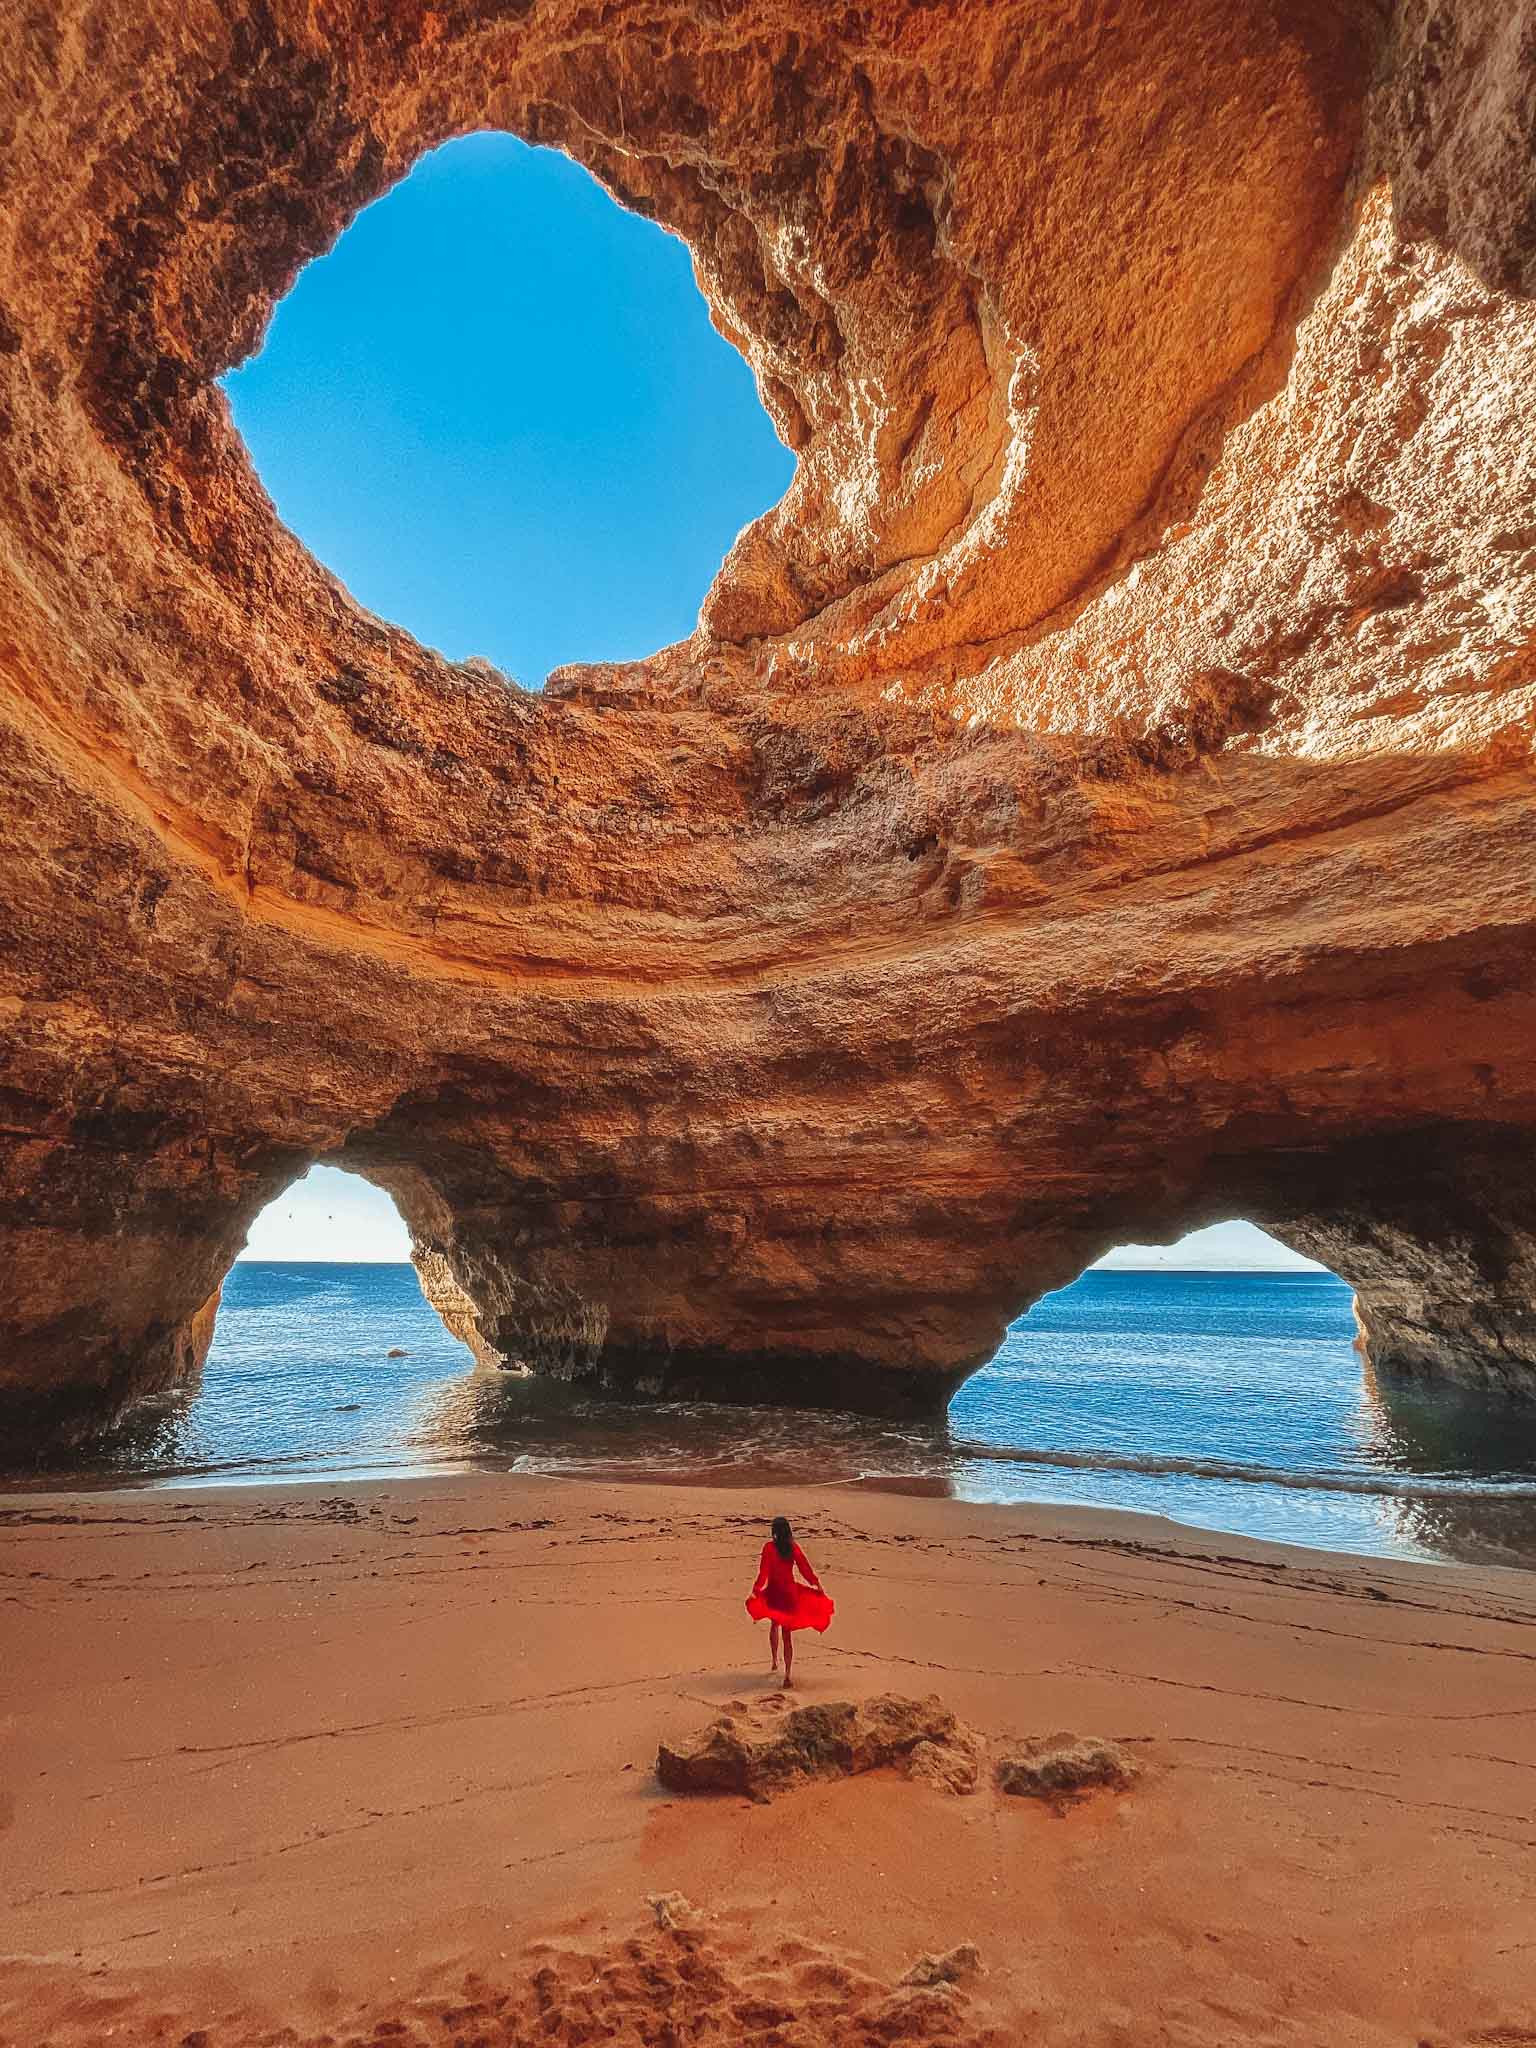 Caves and algars in Algarve Portugal - Algar de Benagil or Benagil cave